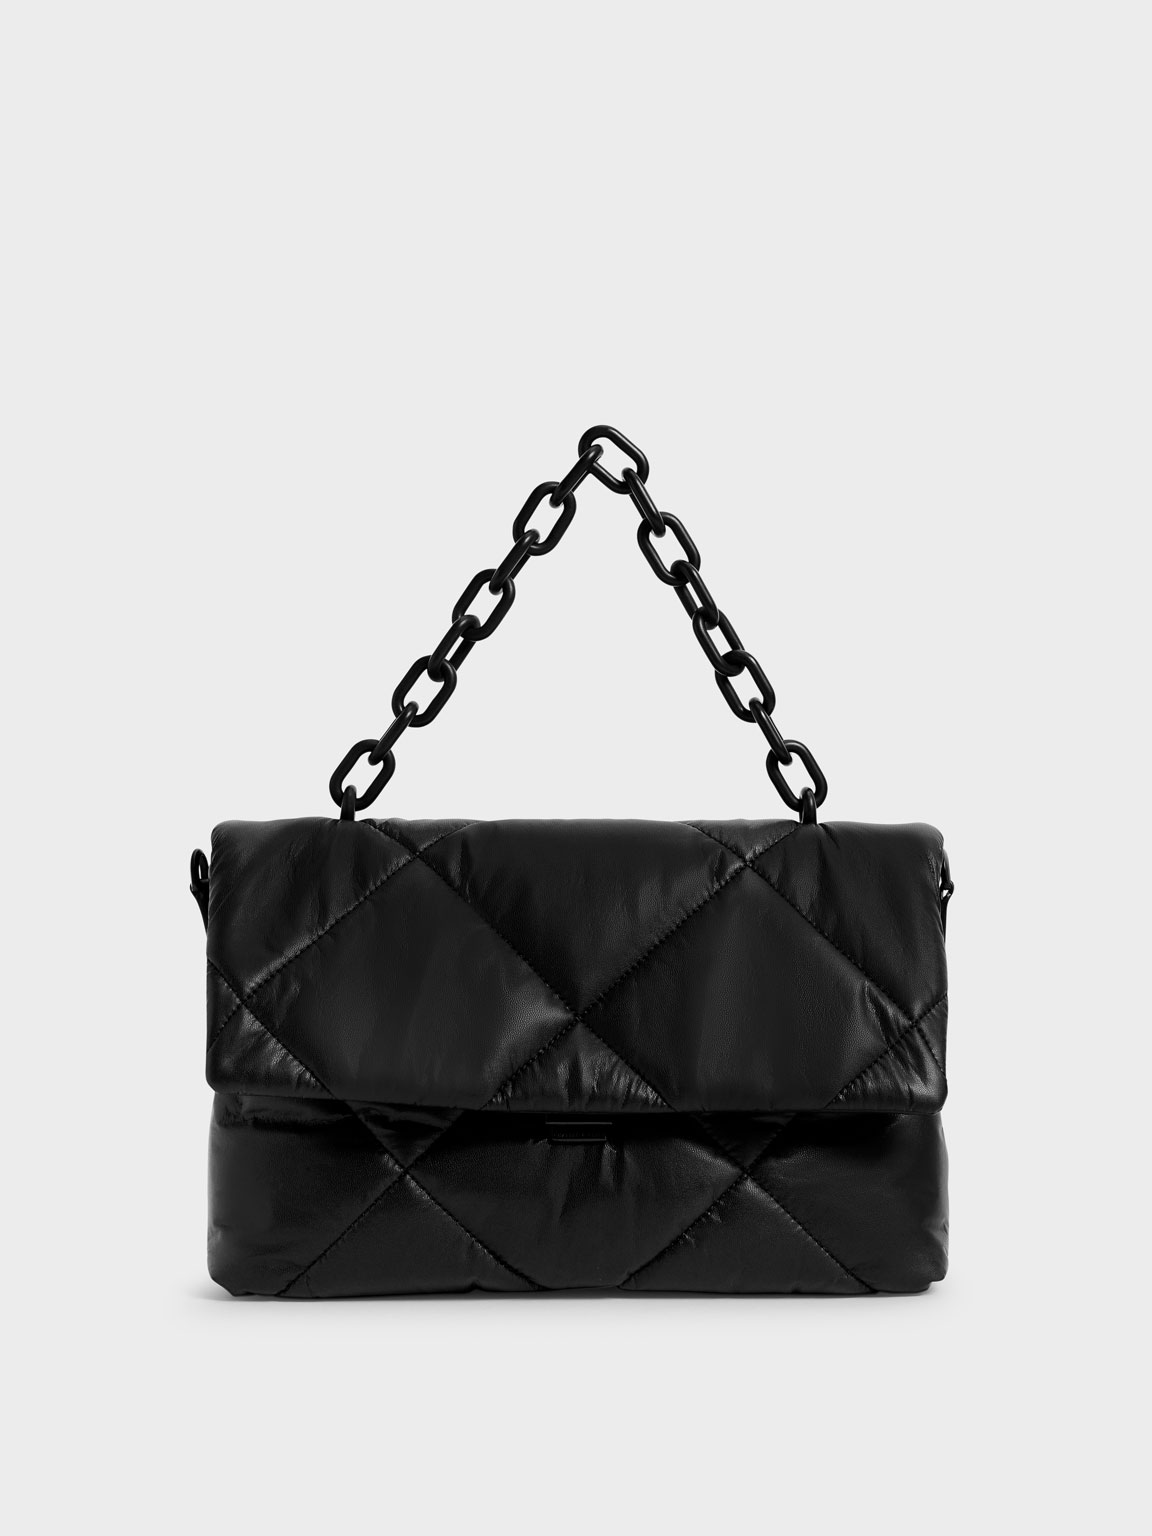 Matte Black Puffer Chain Shoulder Bag - CHARLES & KEITH VN